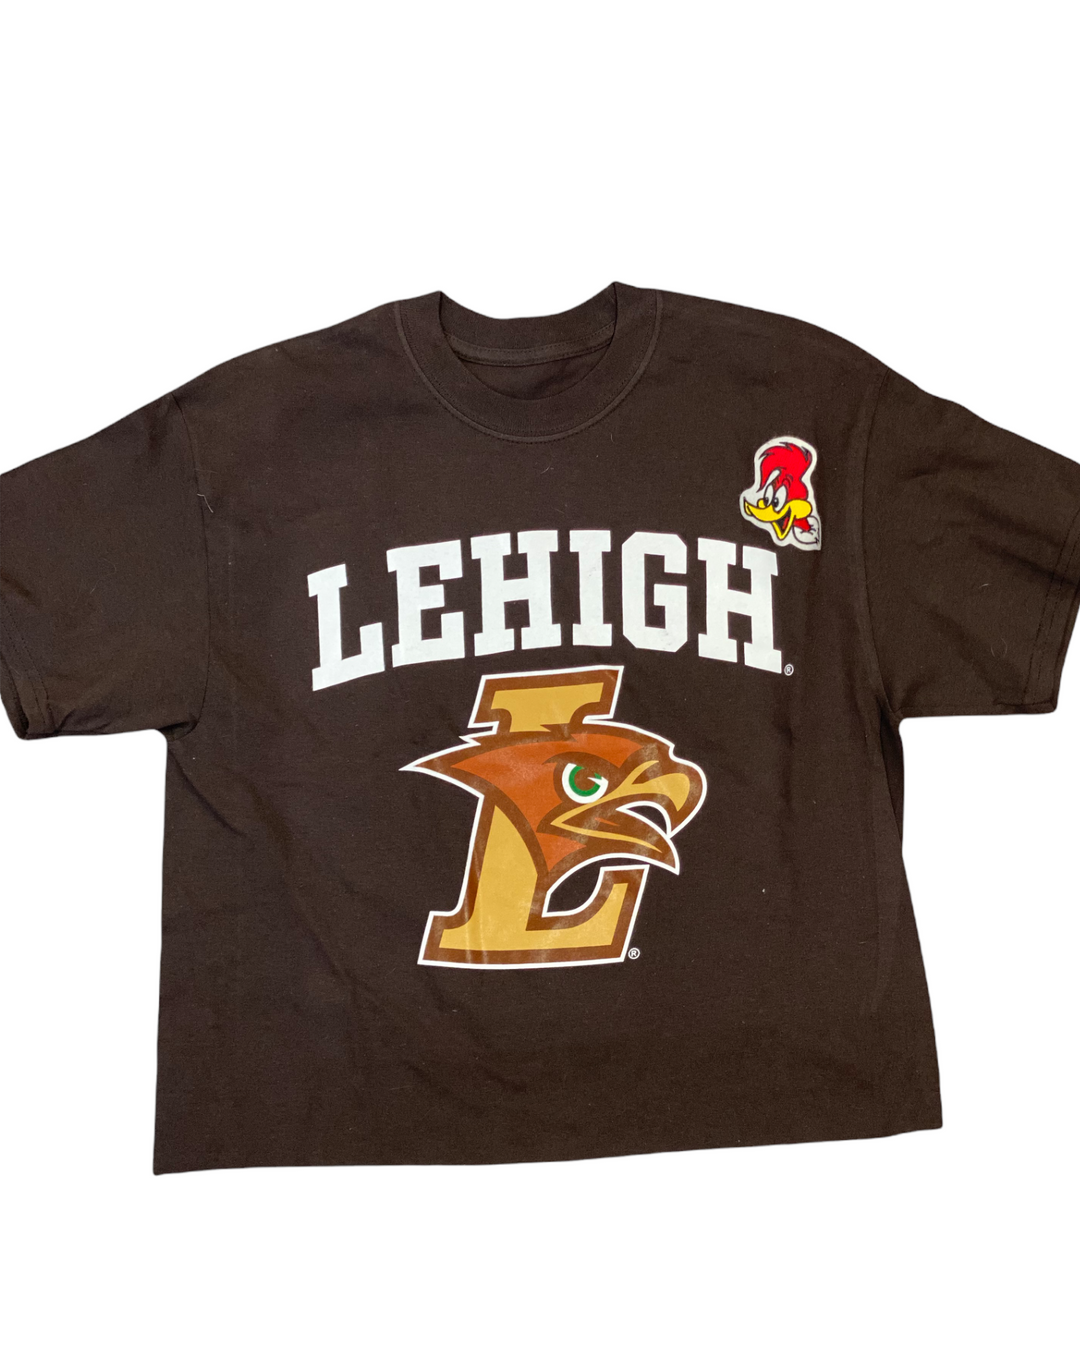 Lehigh Vintage Cropped T-Shirt